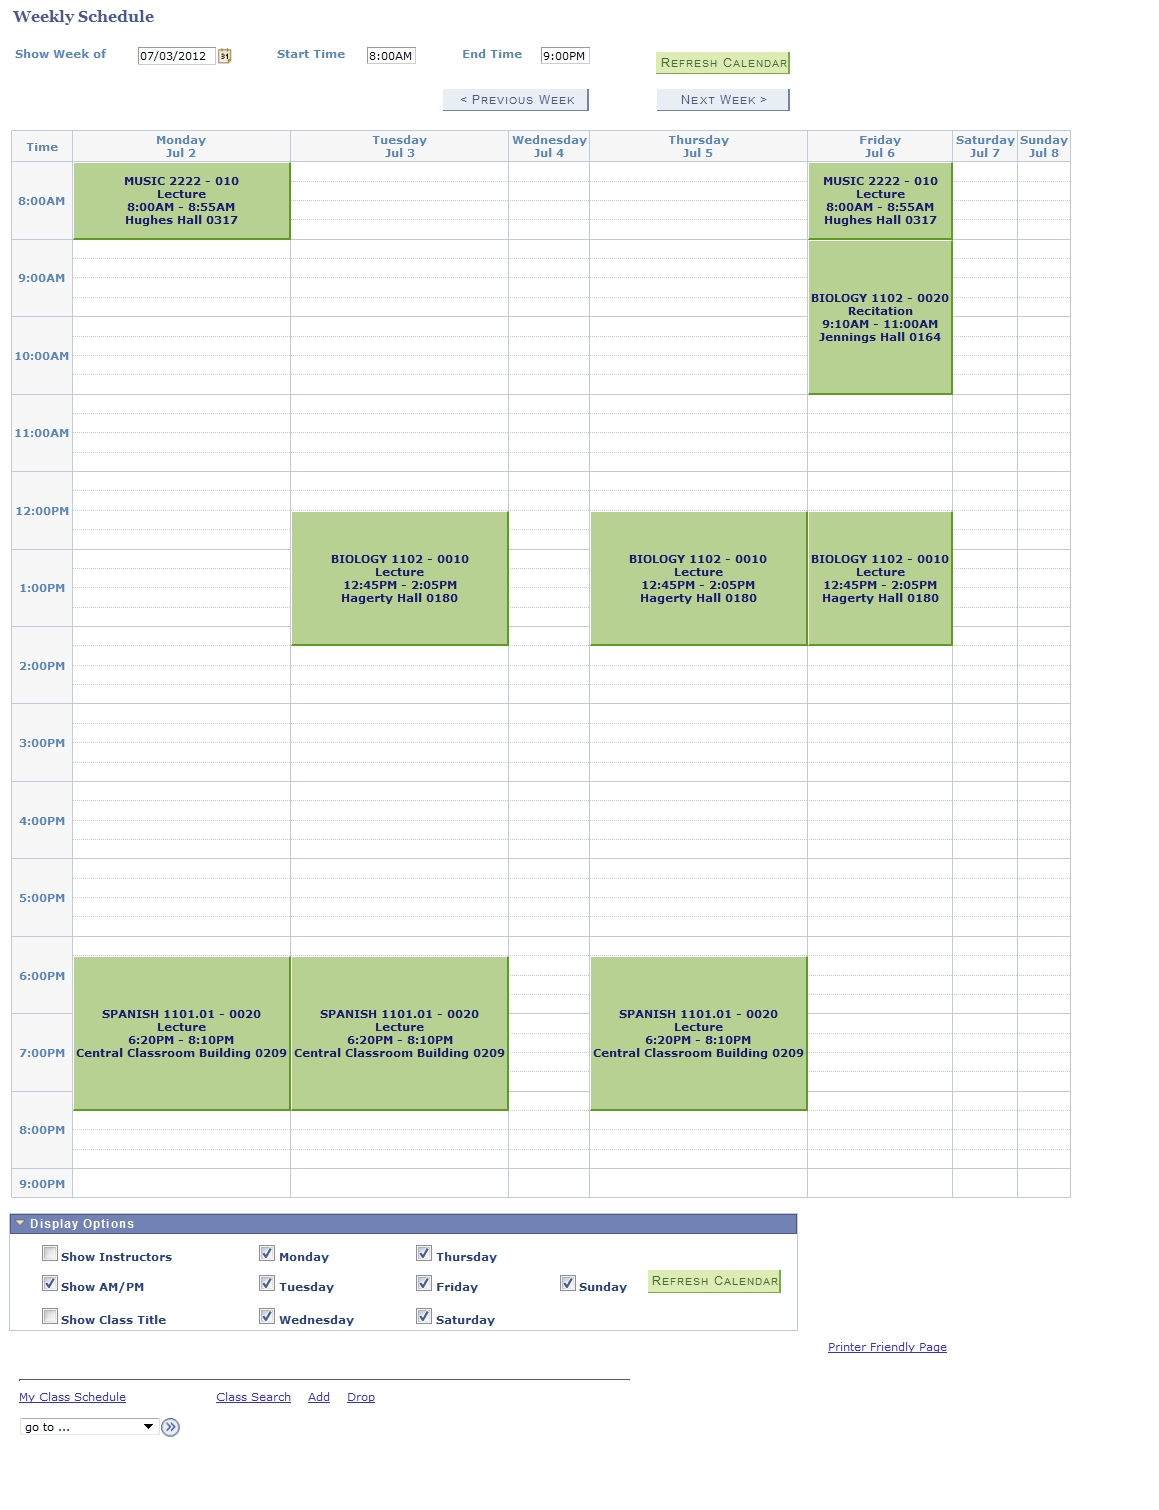 ohio-university-calendar-qualads